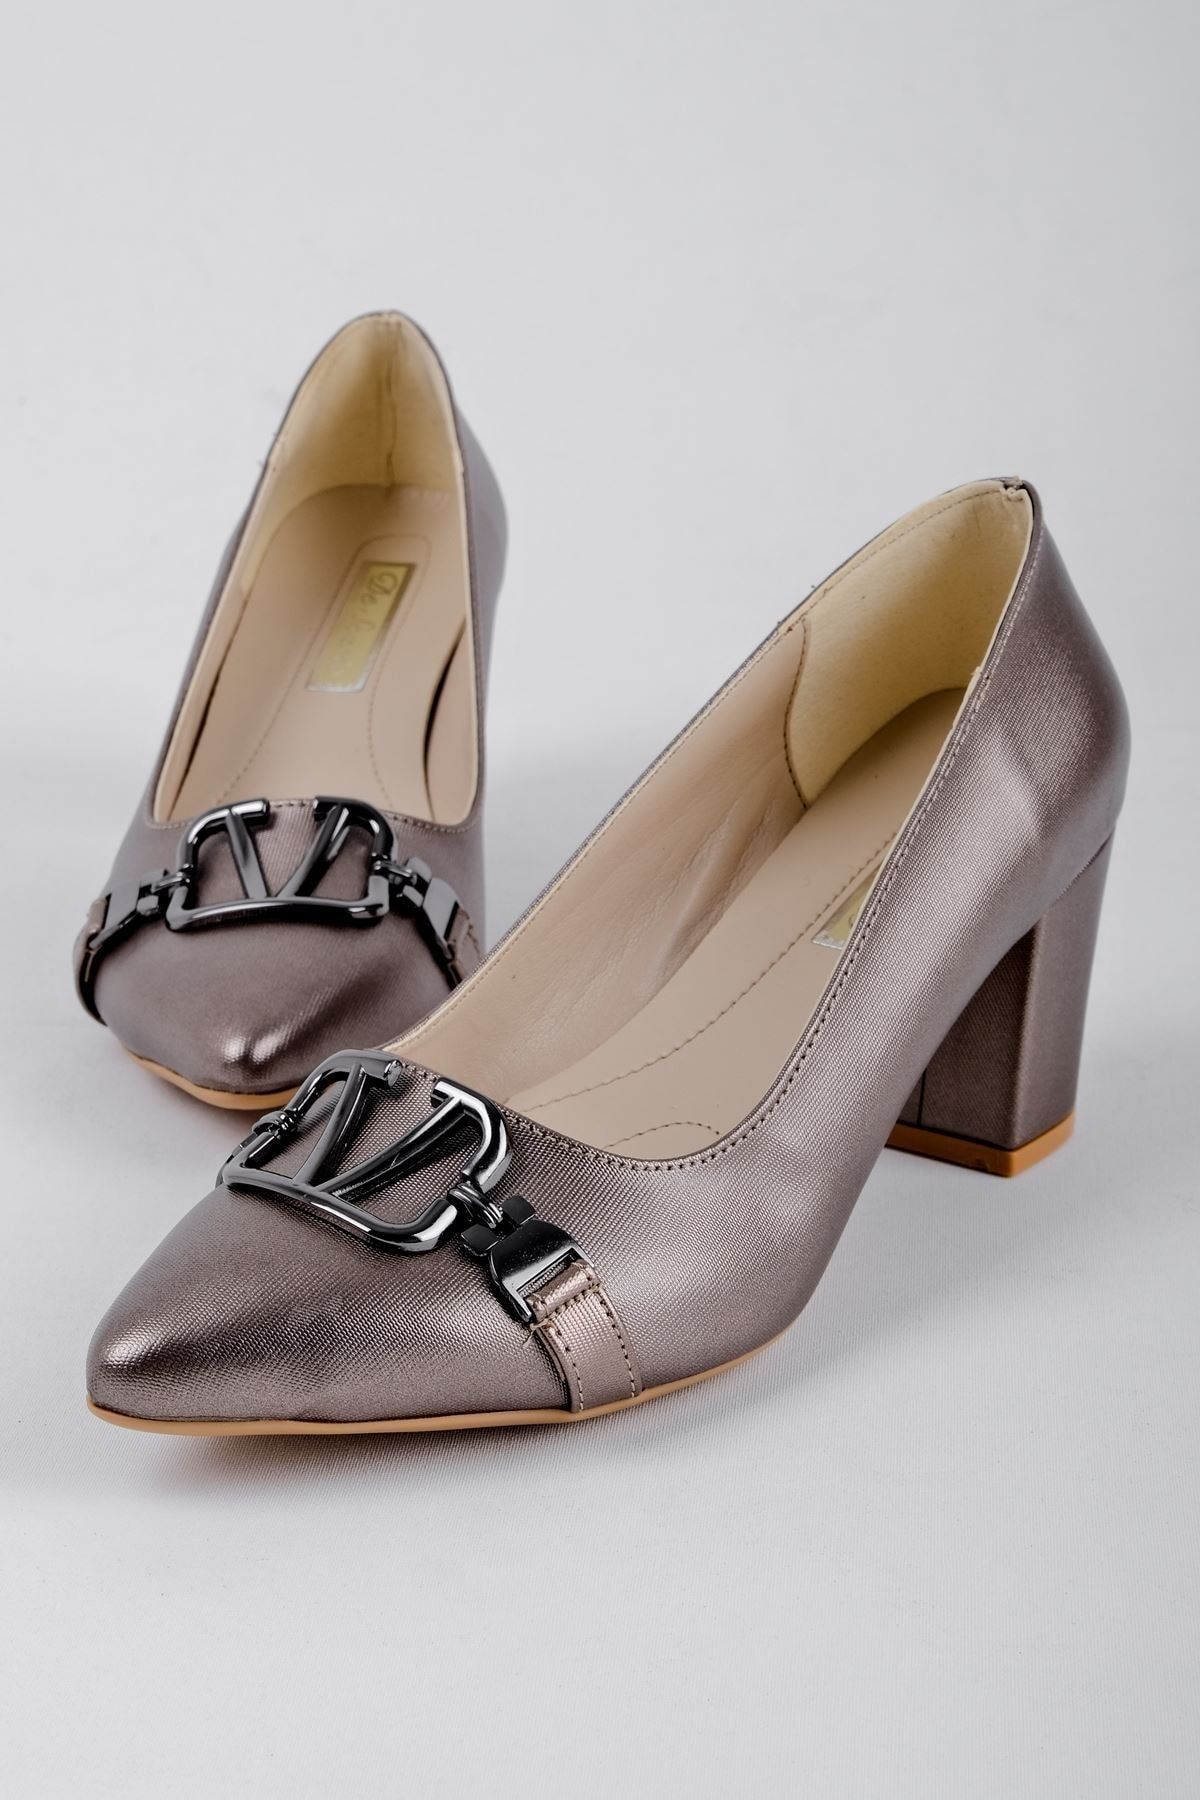 LAL SHOES & BAGS Toore Kadın Sivri Burun Topuklu Ayakkabı V Detaylı-gri